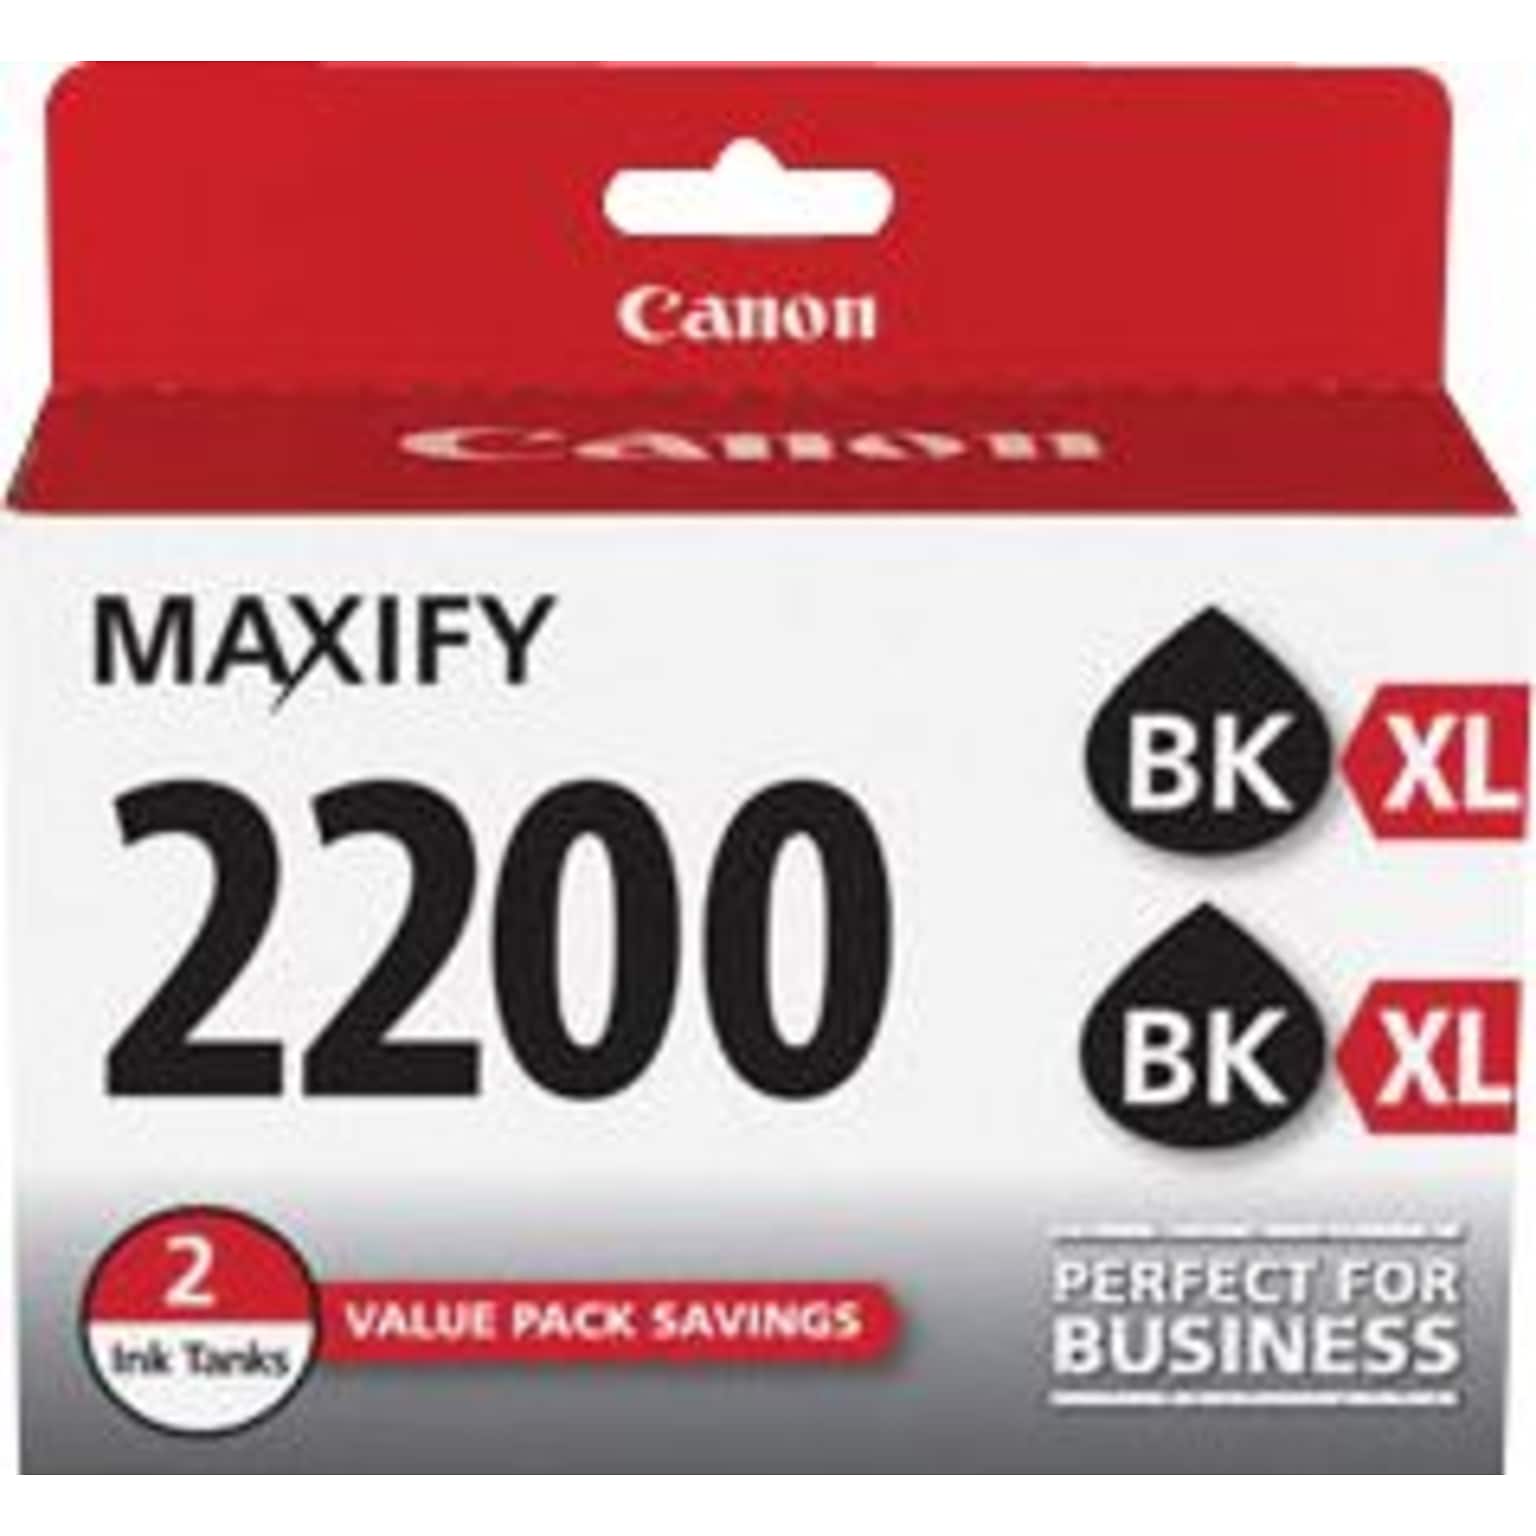 Canon 2200 XL, Black High Yield Ink Cartridge, 2/Pack (9255B006)